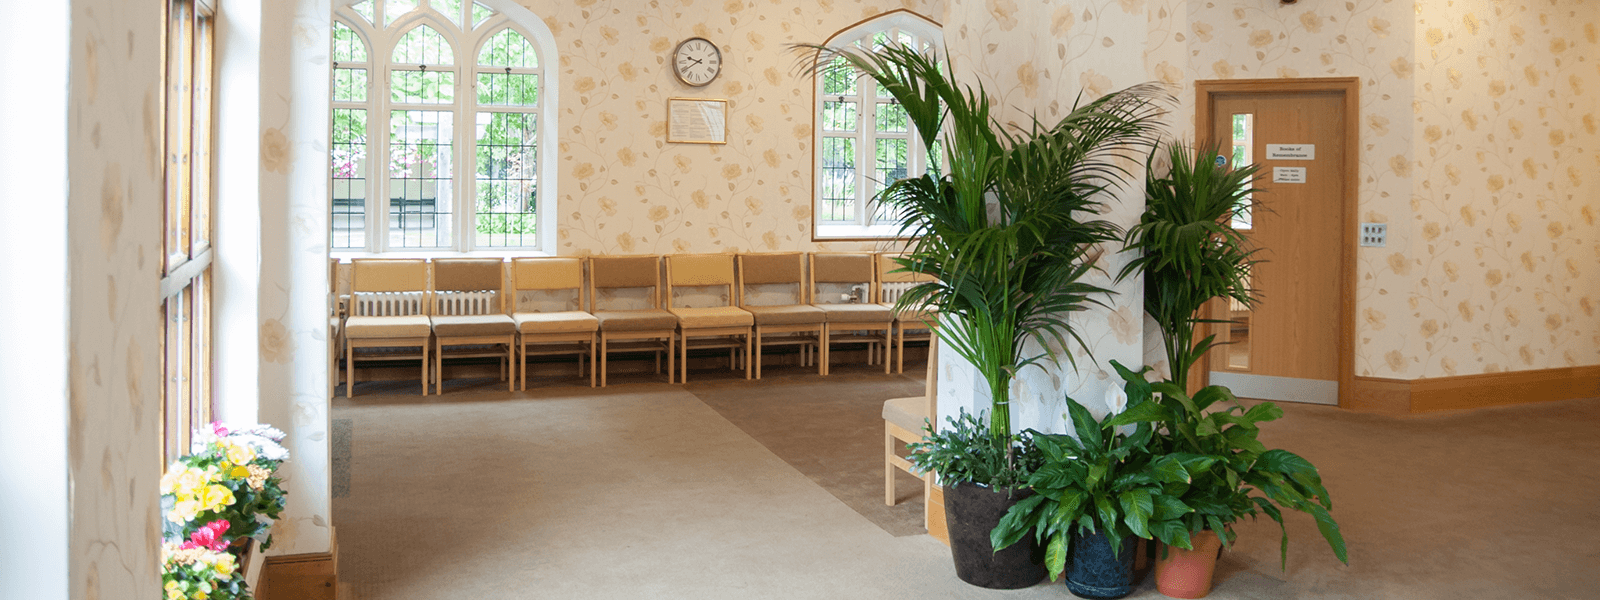 The waiting room at Bournemouth Crematorium